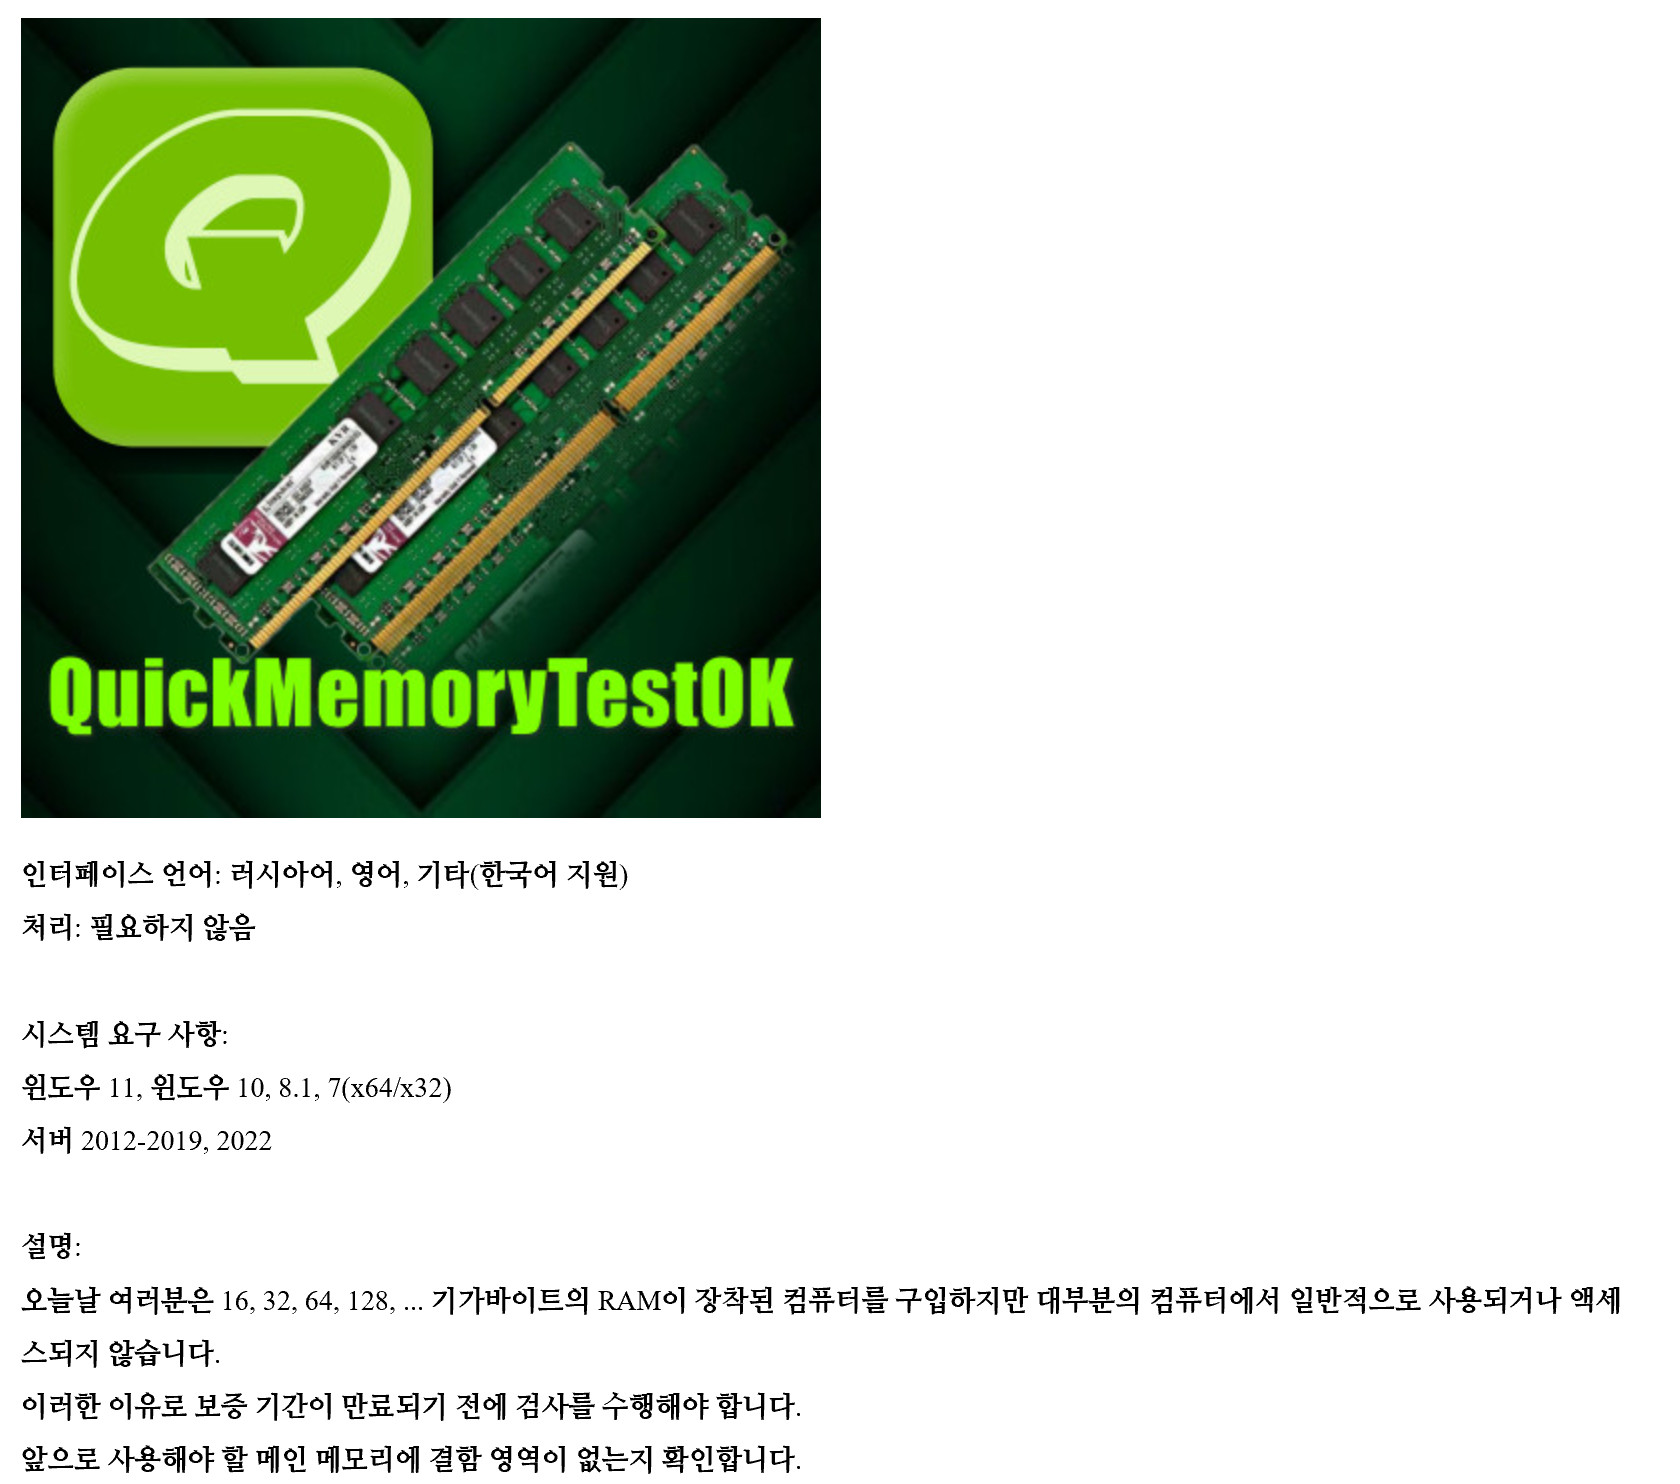 QuickMemoryTestOK 4.67 for apple instal